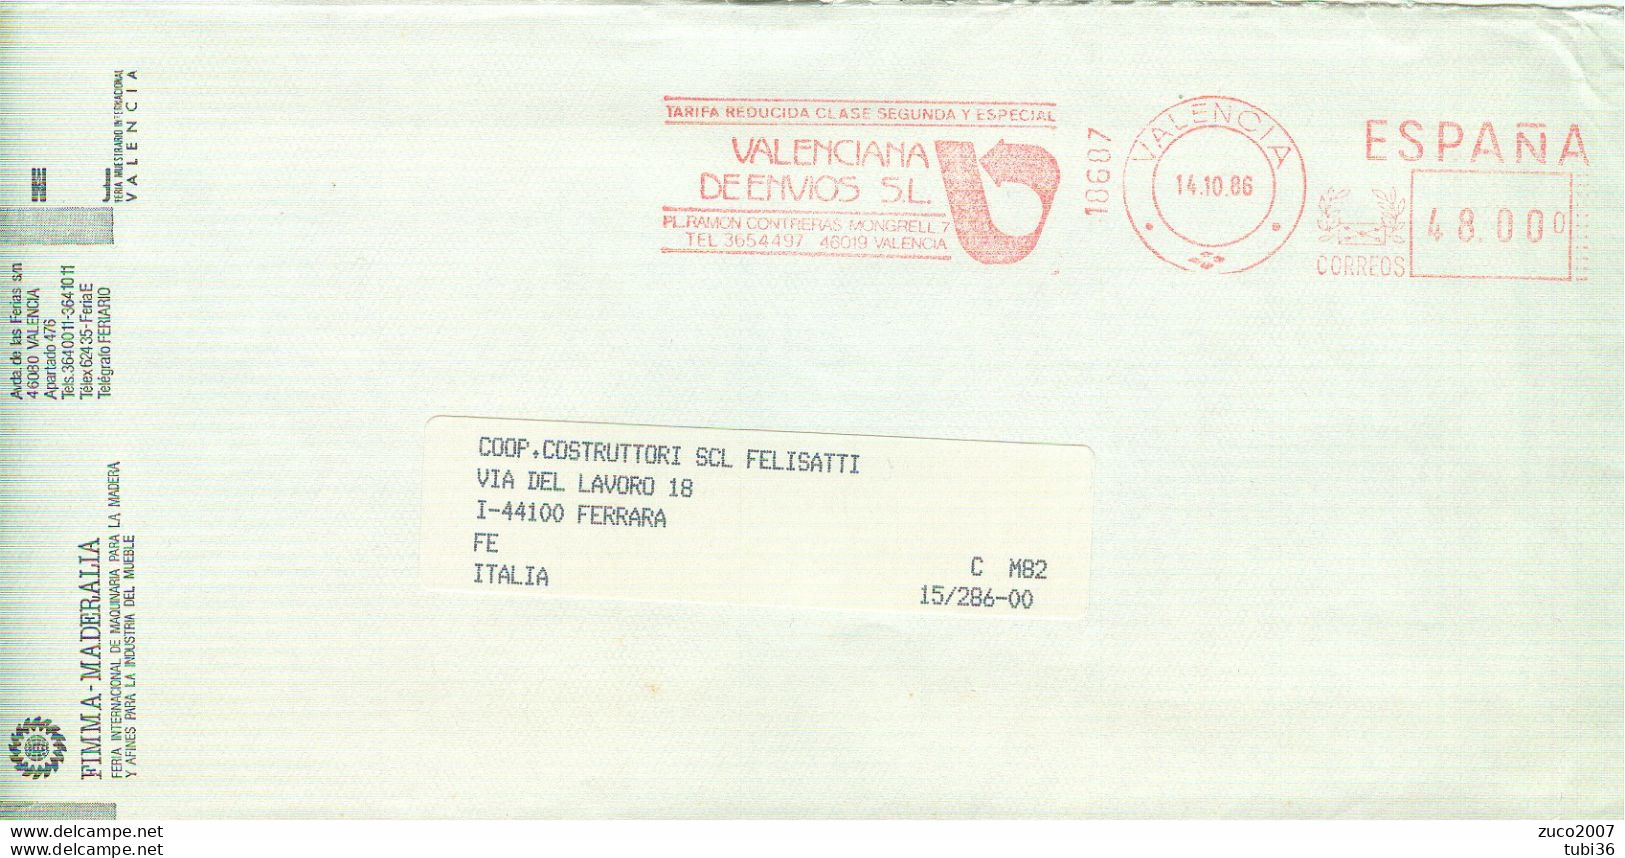 SPAGNA - ESPANA - VALENCIA - 1986 - FERRARA - ITALIA - Franking Machines (EMA)